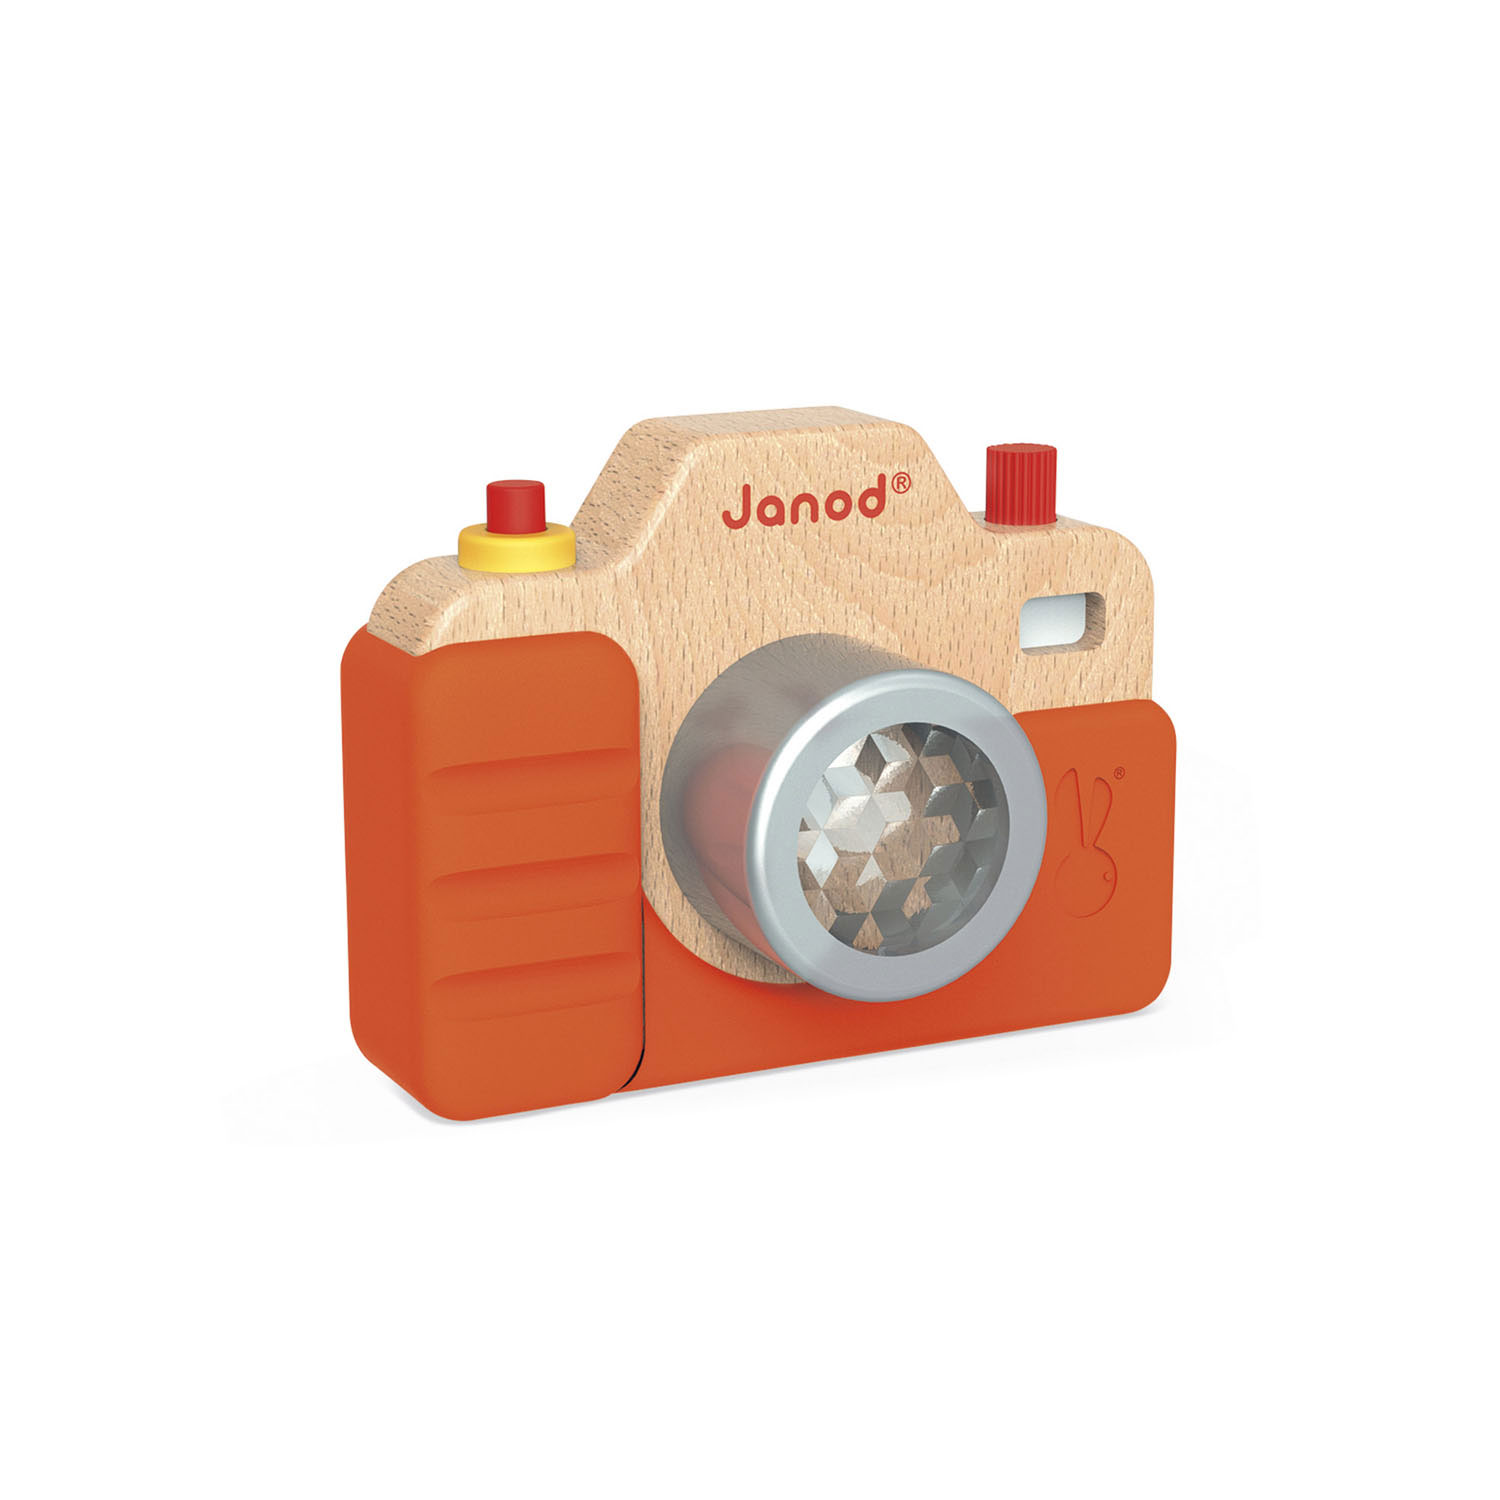 Janod Camera met Geluid